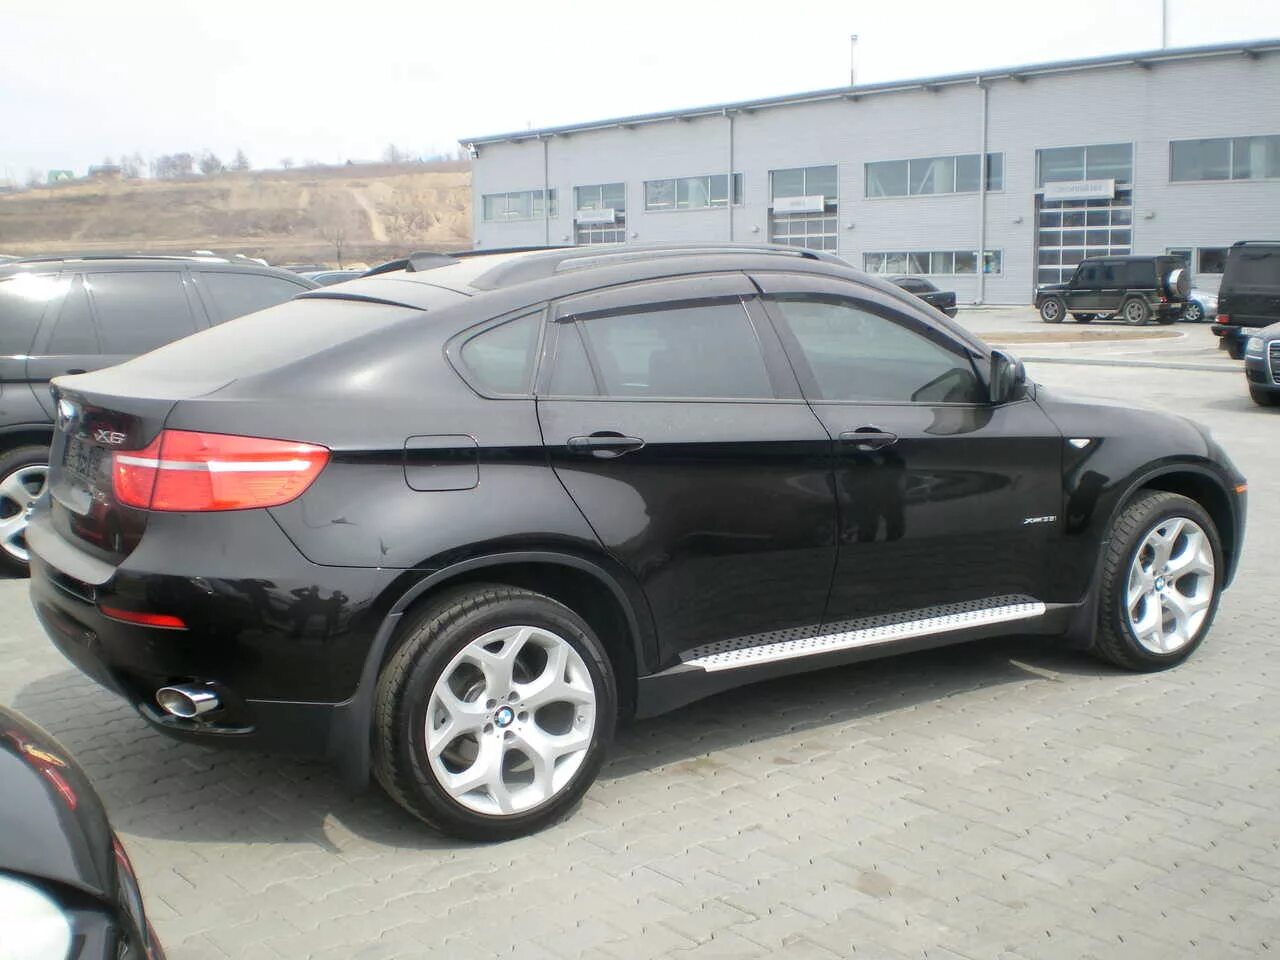 BMW x6 2009 черная. БМВ x6 2005. БМВ Икс 6 черная. БМВ Икс 6 БМВ Икс 6.